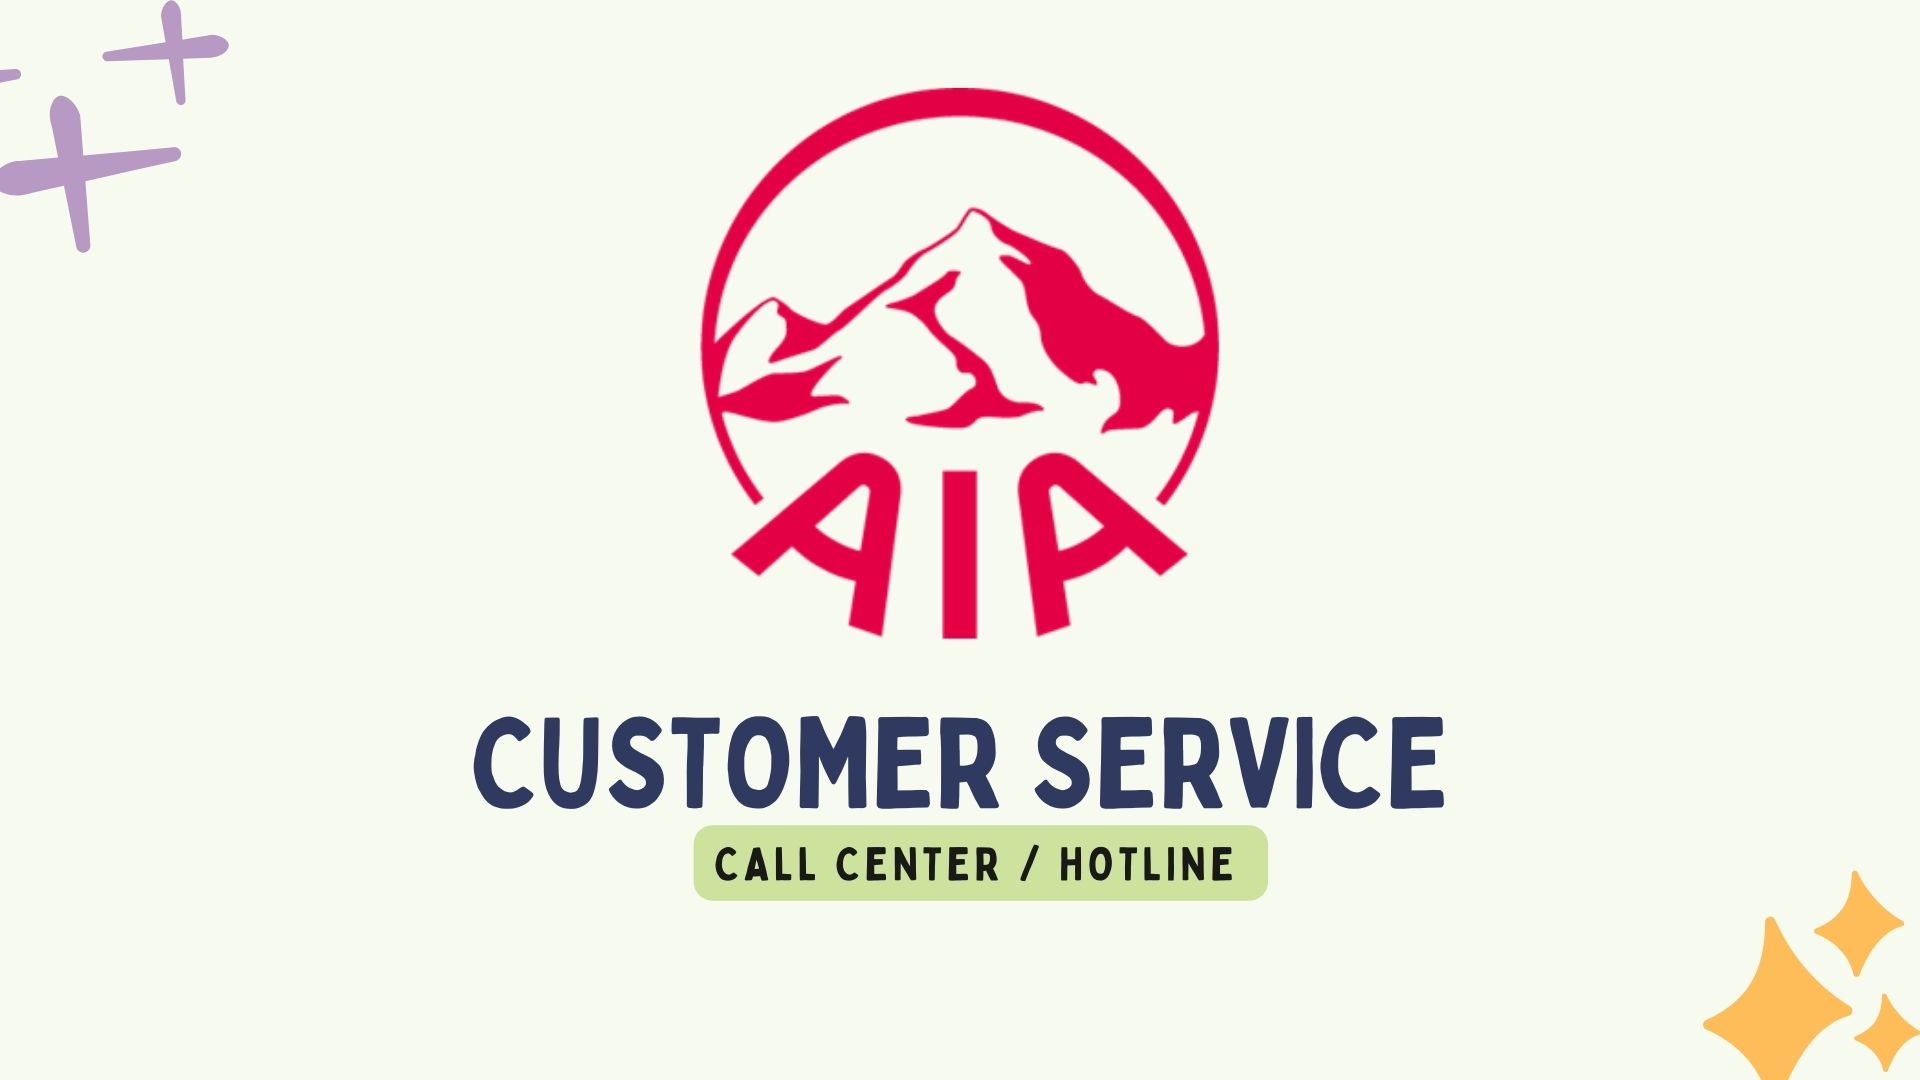 AIA Customer Service